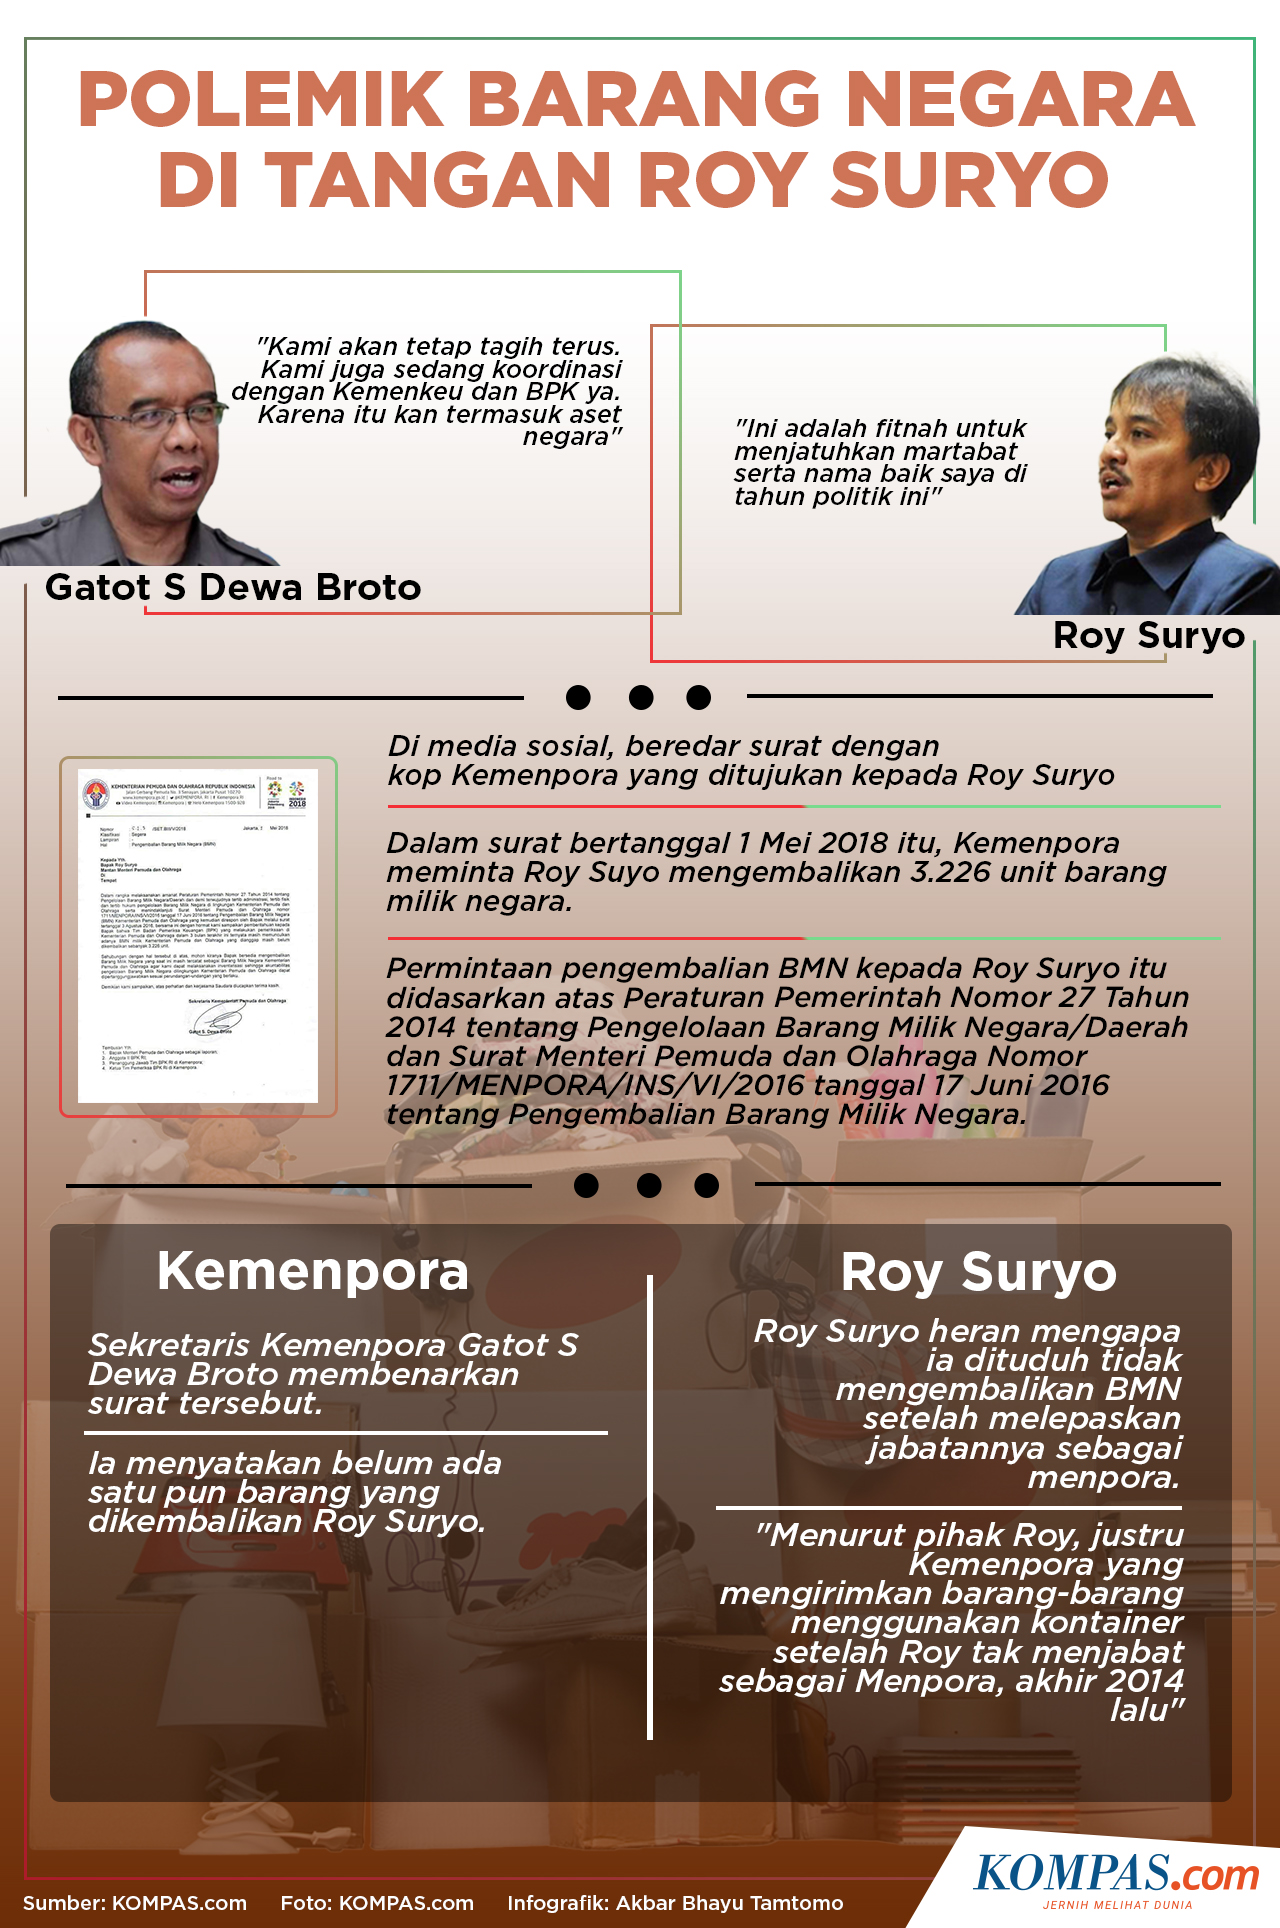 Infografik Polemik Barang Negara di Tangan Roy Suryo KOMPAS Akbar Bhayu Tamtomo